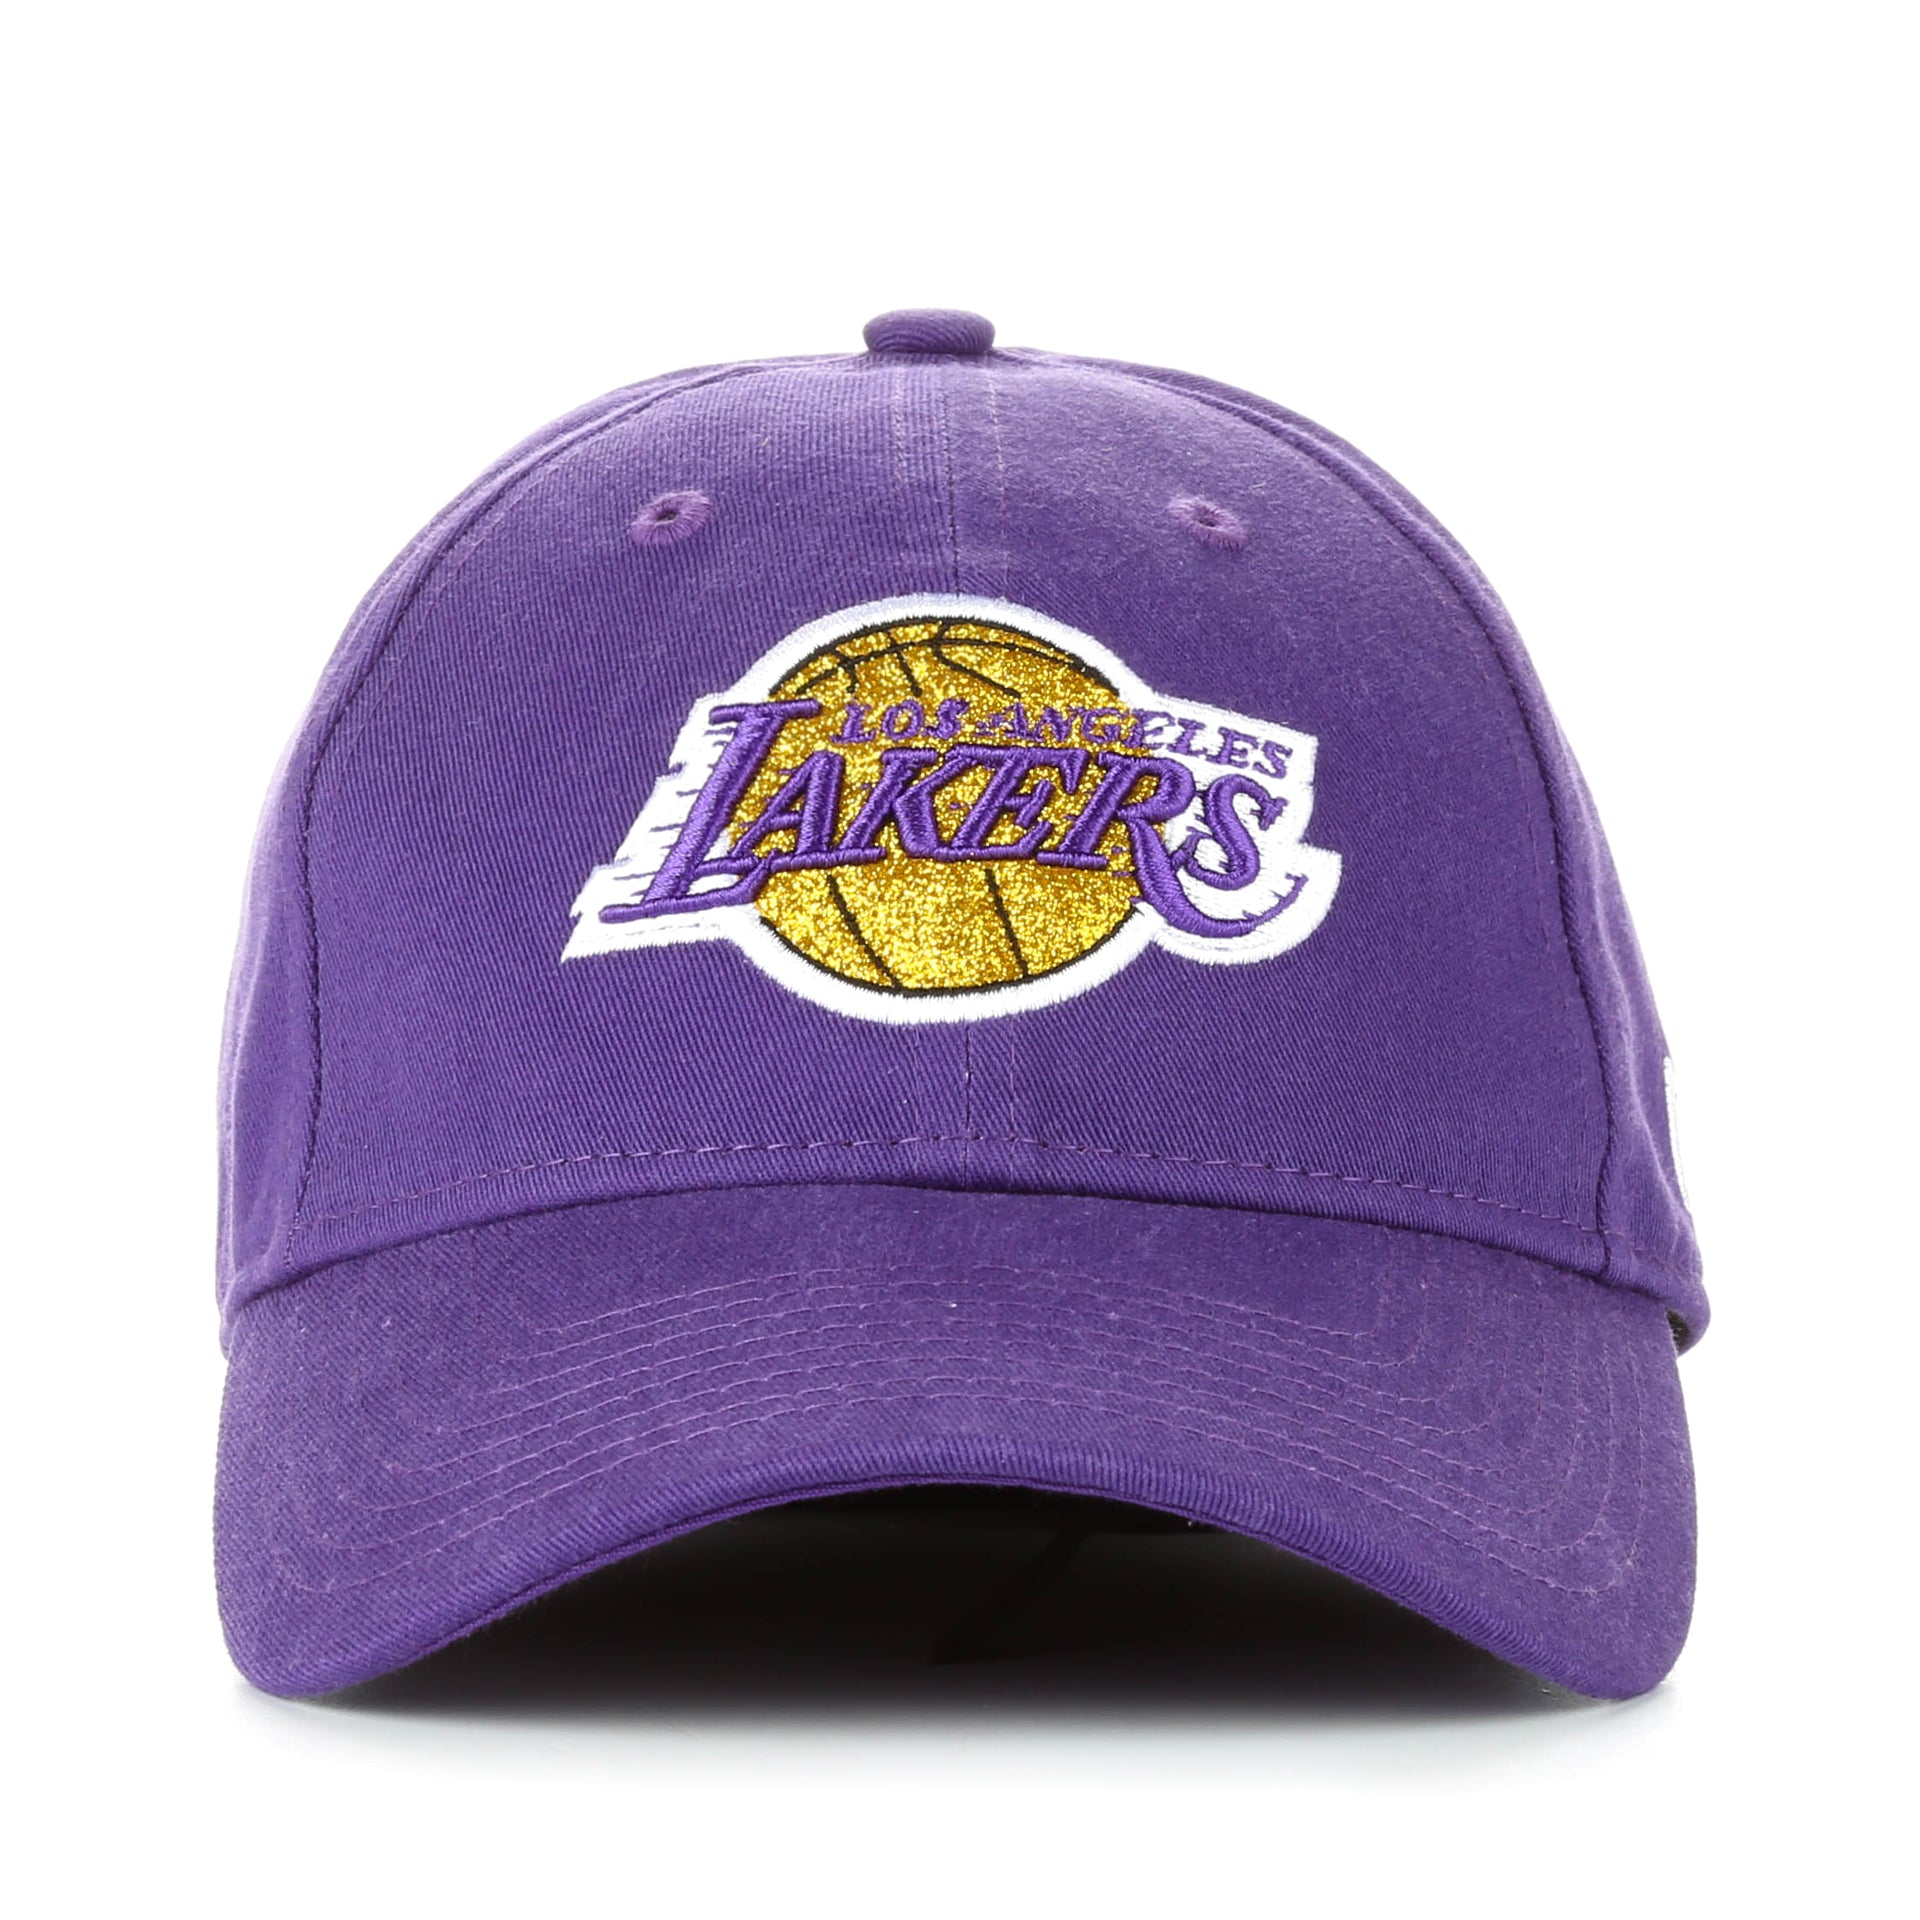 New Era 9Twenty Women's Team Glisten Cap - Los Angeles Lakers/Purple - New  Star